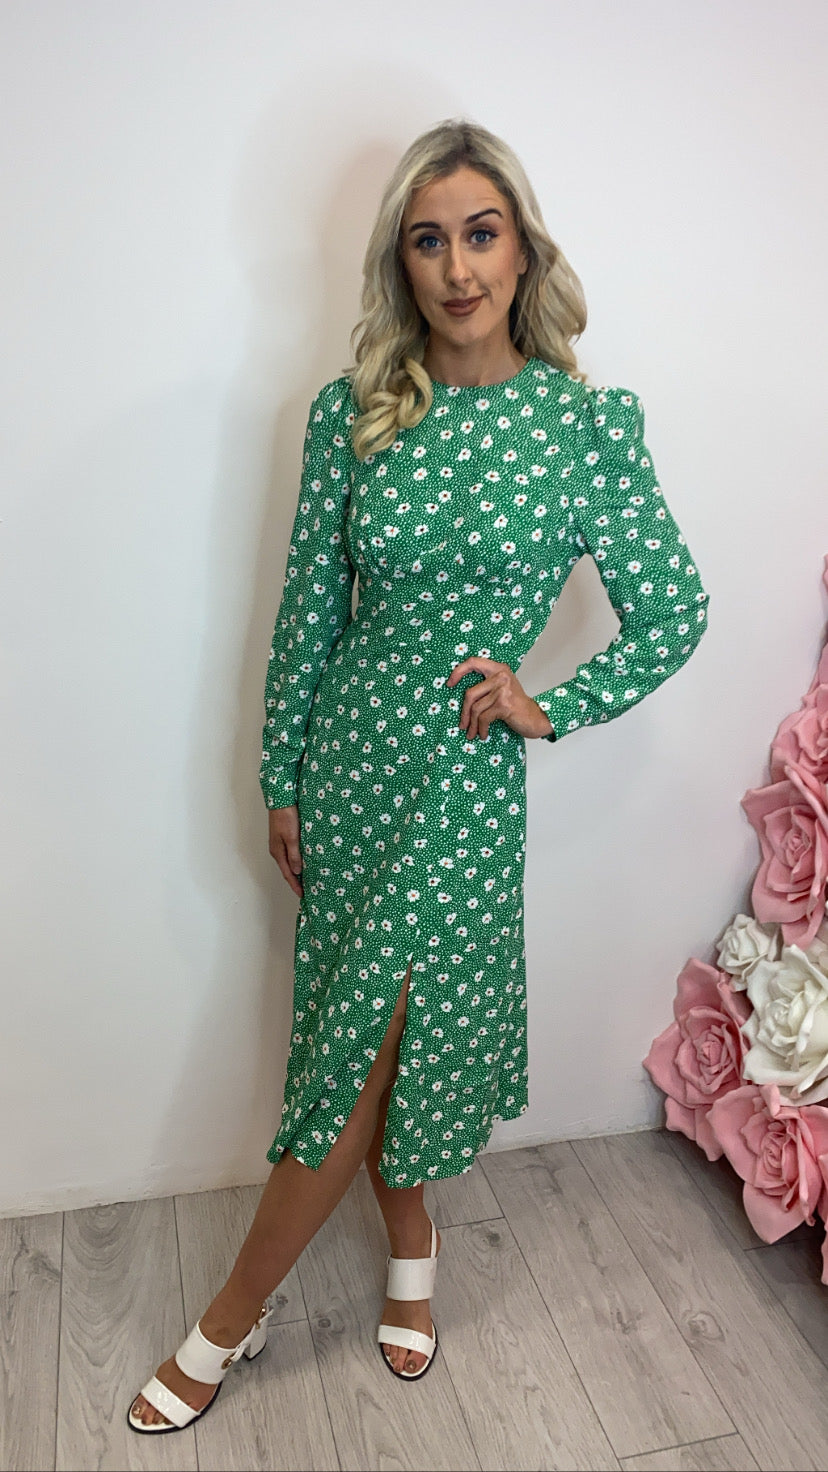 Cass Long Sleeve Split Leg Midi Dress Green Ditsy Floral sale